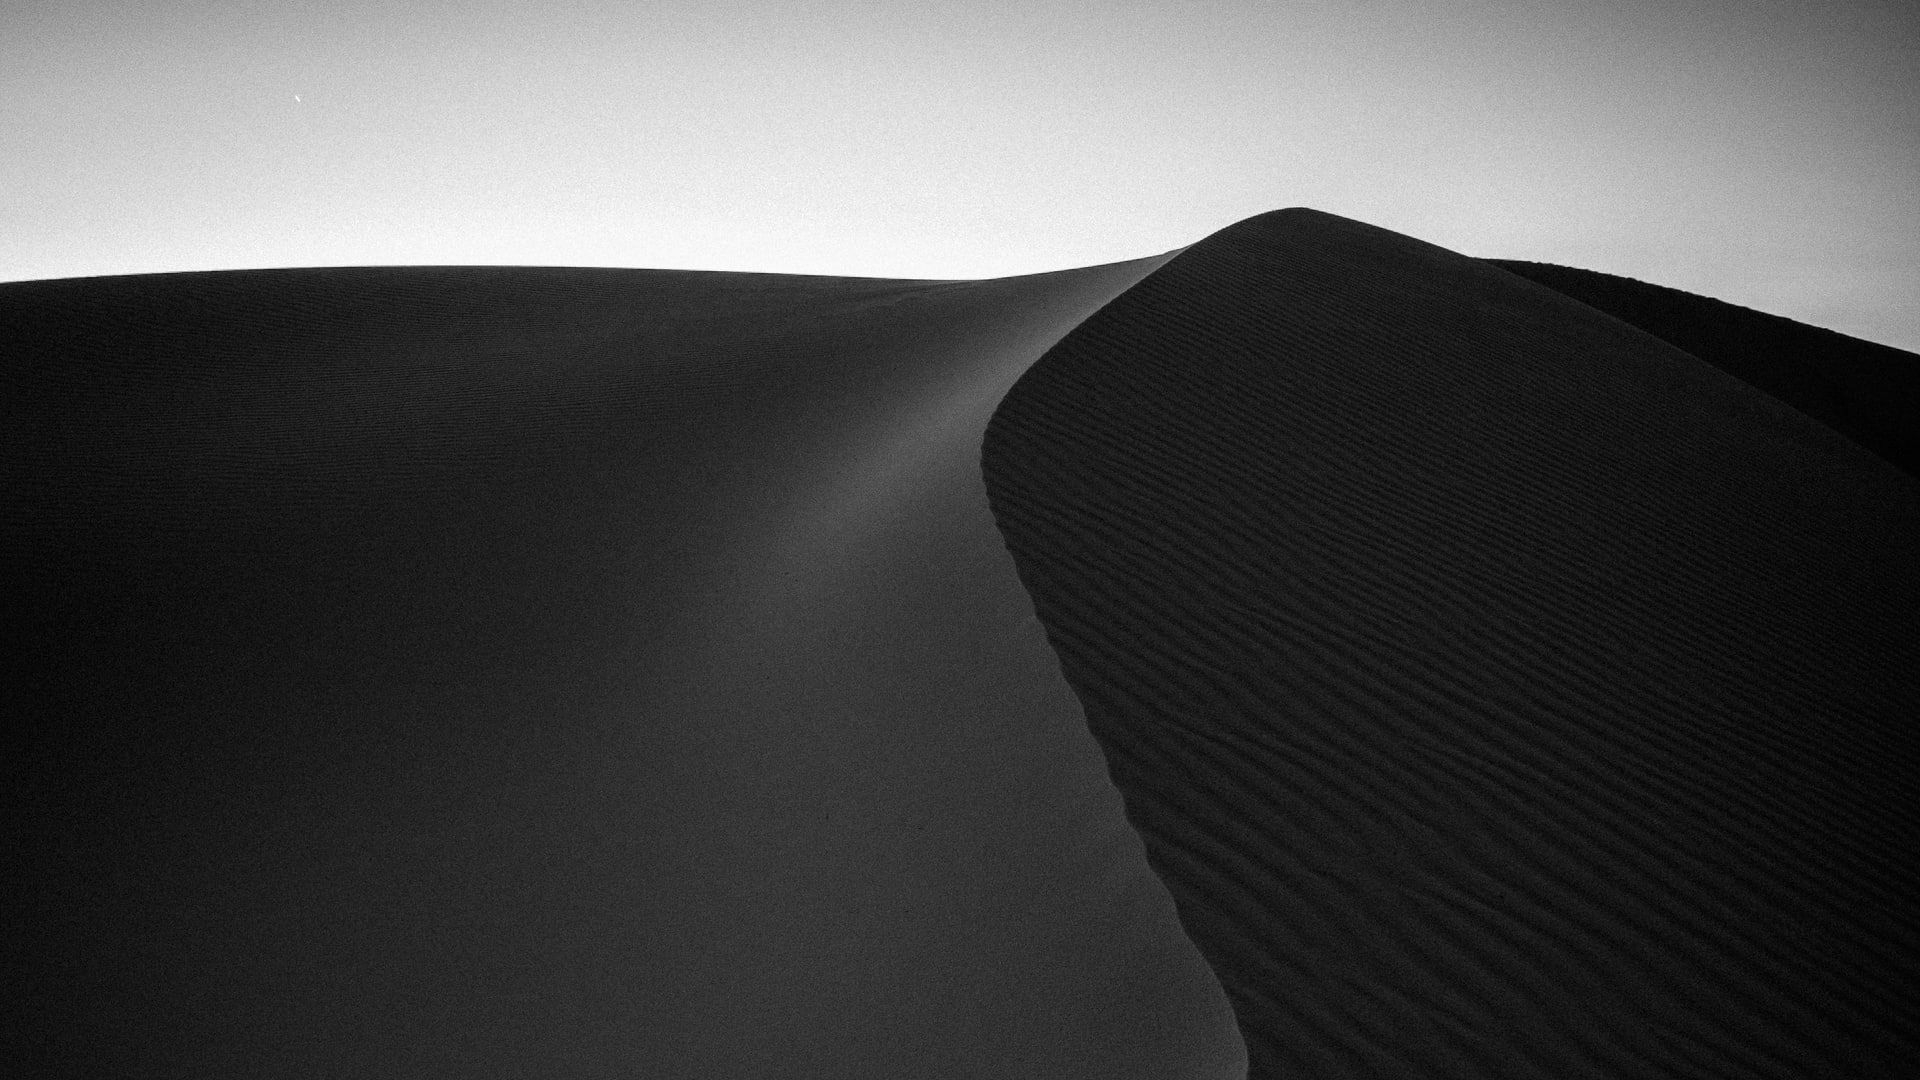 1920x1080 desert #landscape #sand #monochrome sand dunes #nature #dark #1080P # wallpaper #hdwallpaper #desktop | Sand dunes, Dune, Black sand